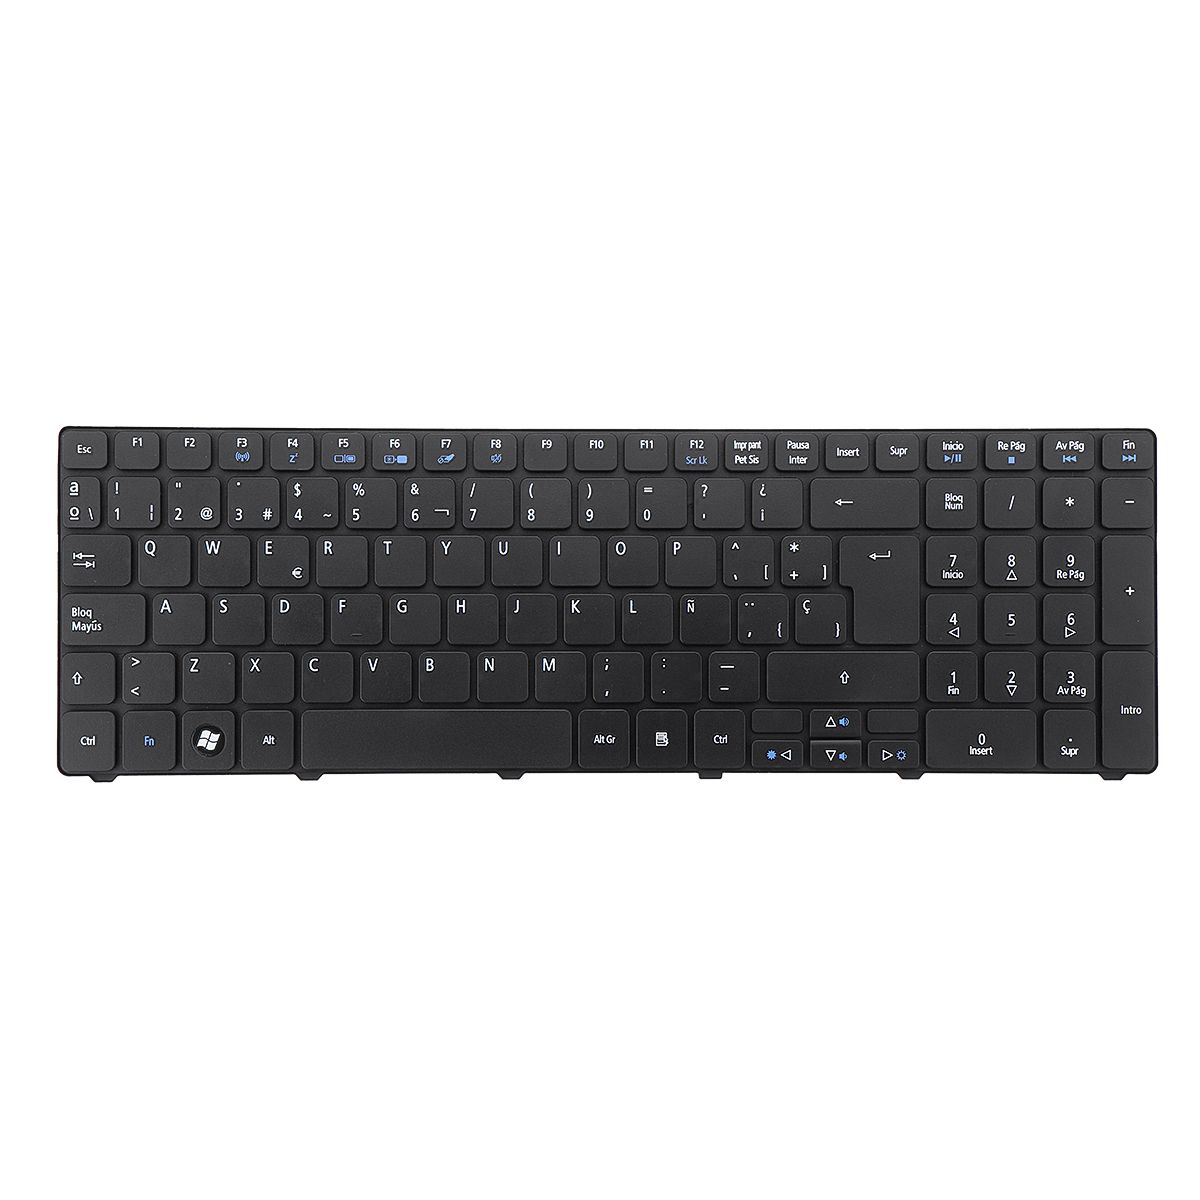 Mechanical-Keyboard-For-Acer-Aspire-5250-5251-5252-5253-5349-1706323